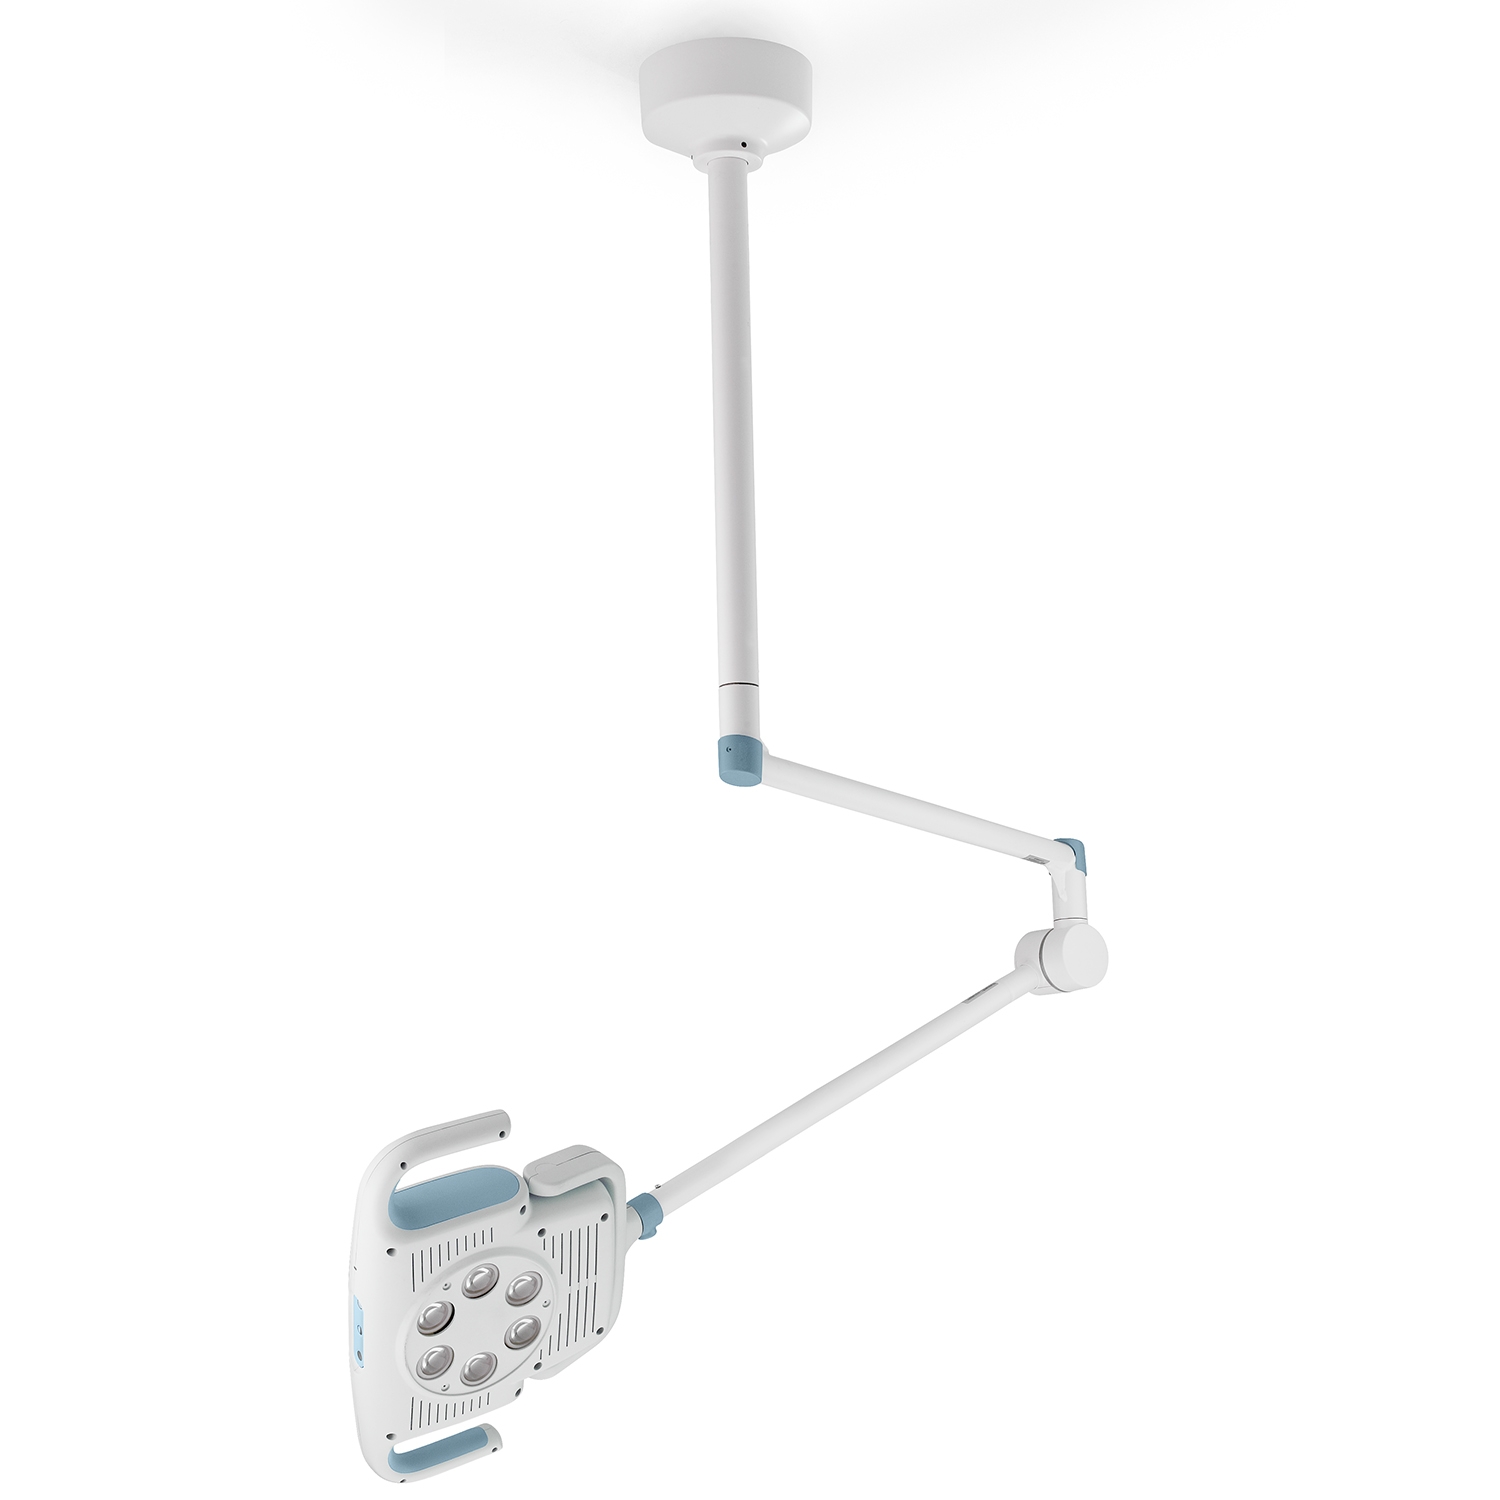 Welch Allyn lampe d'examen GS900 LED + fixation plafond